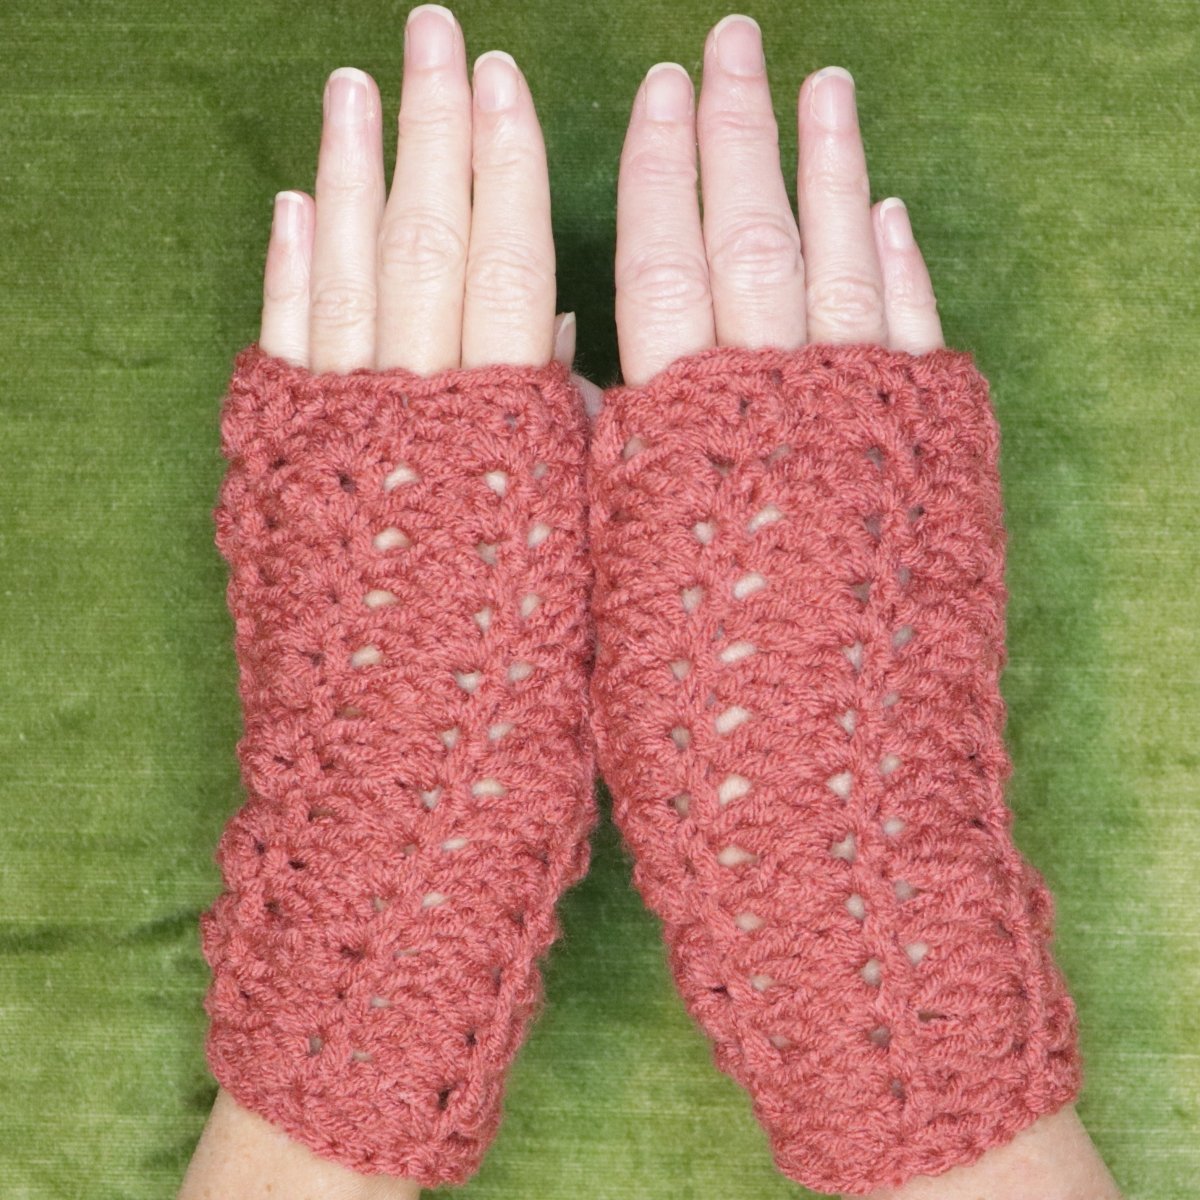 Sober Granny in a Spiral Crochet Fingerless Gloves - The Secret Yarnery